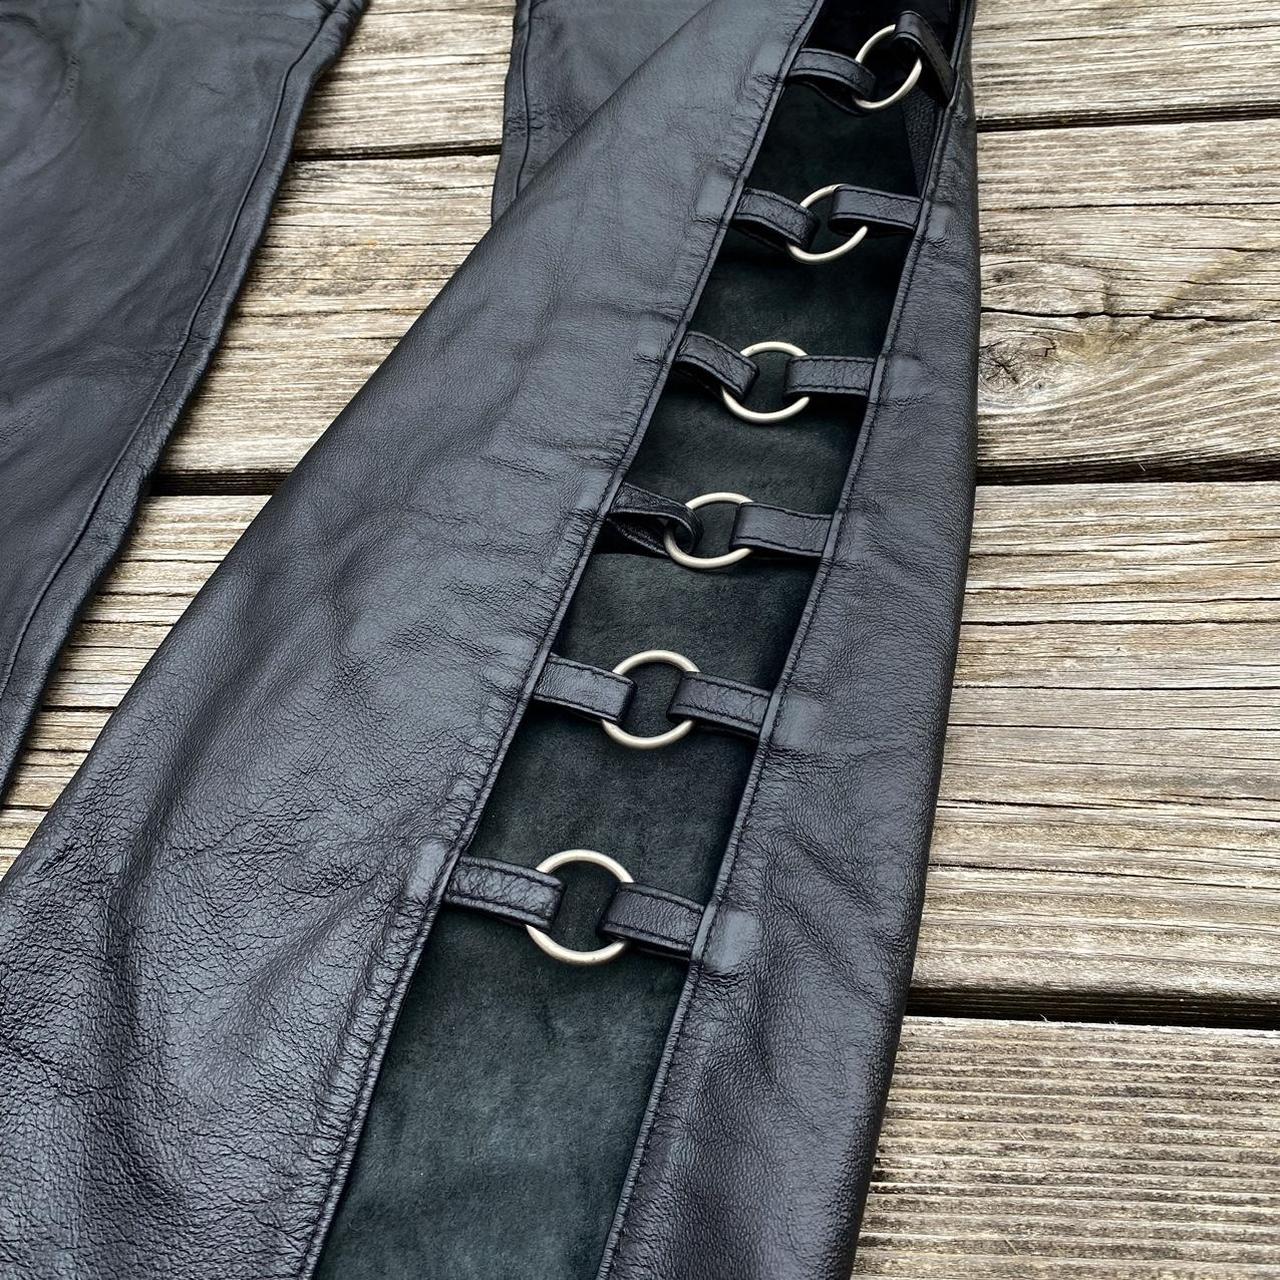 Black Faux Leather Lace Pant - sosorella